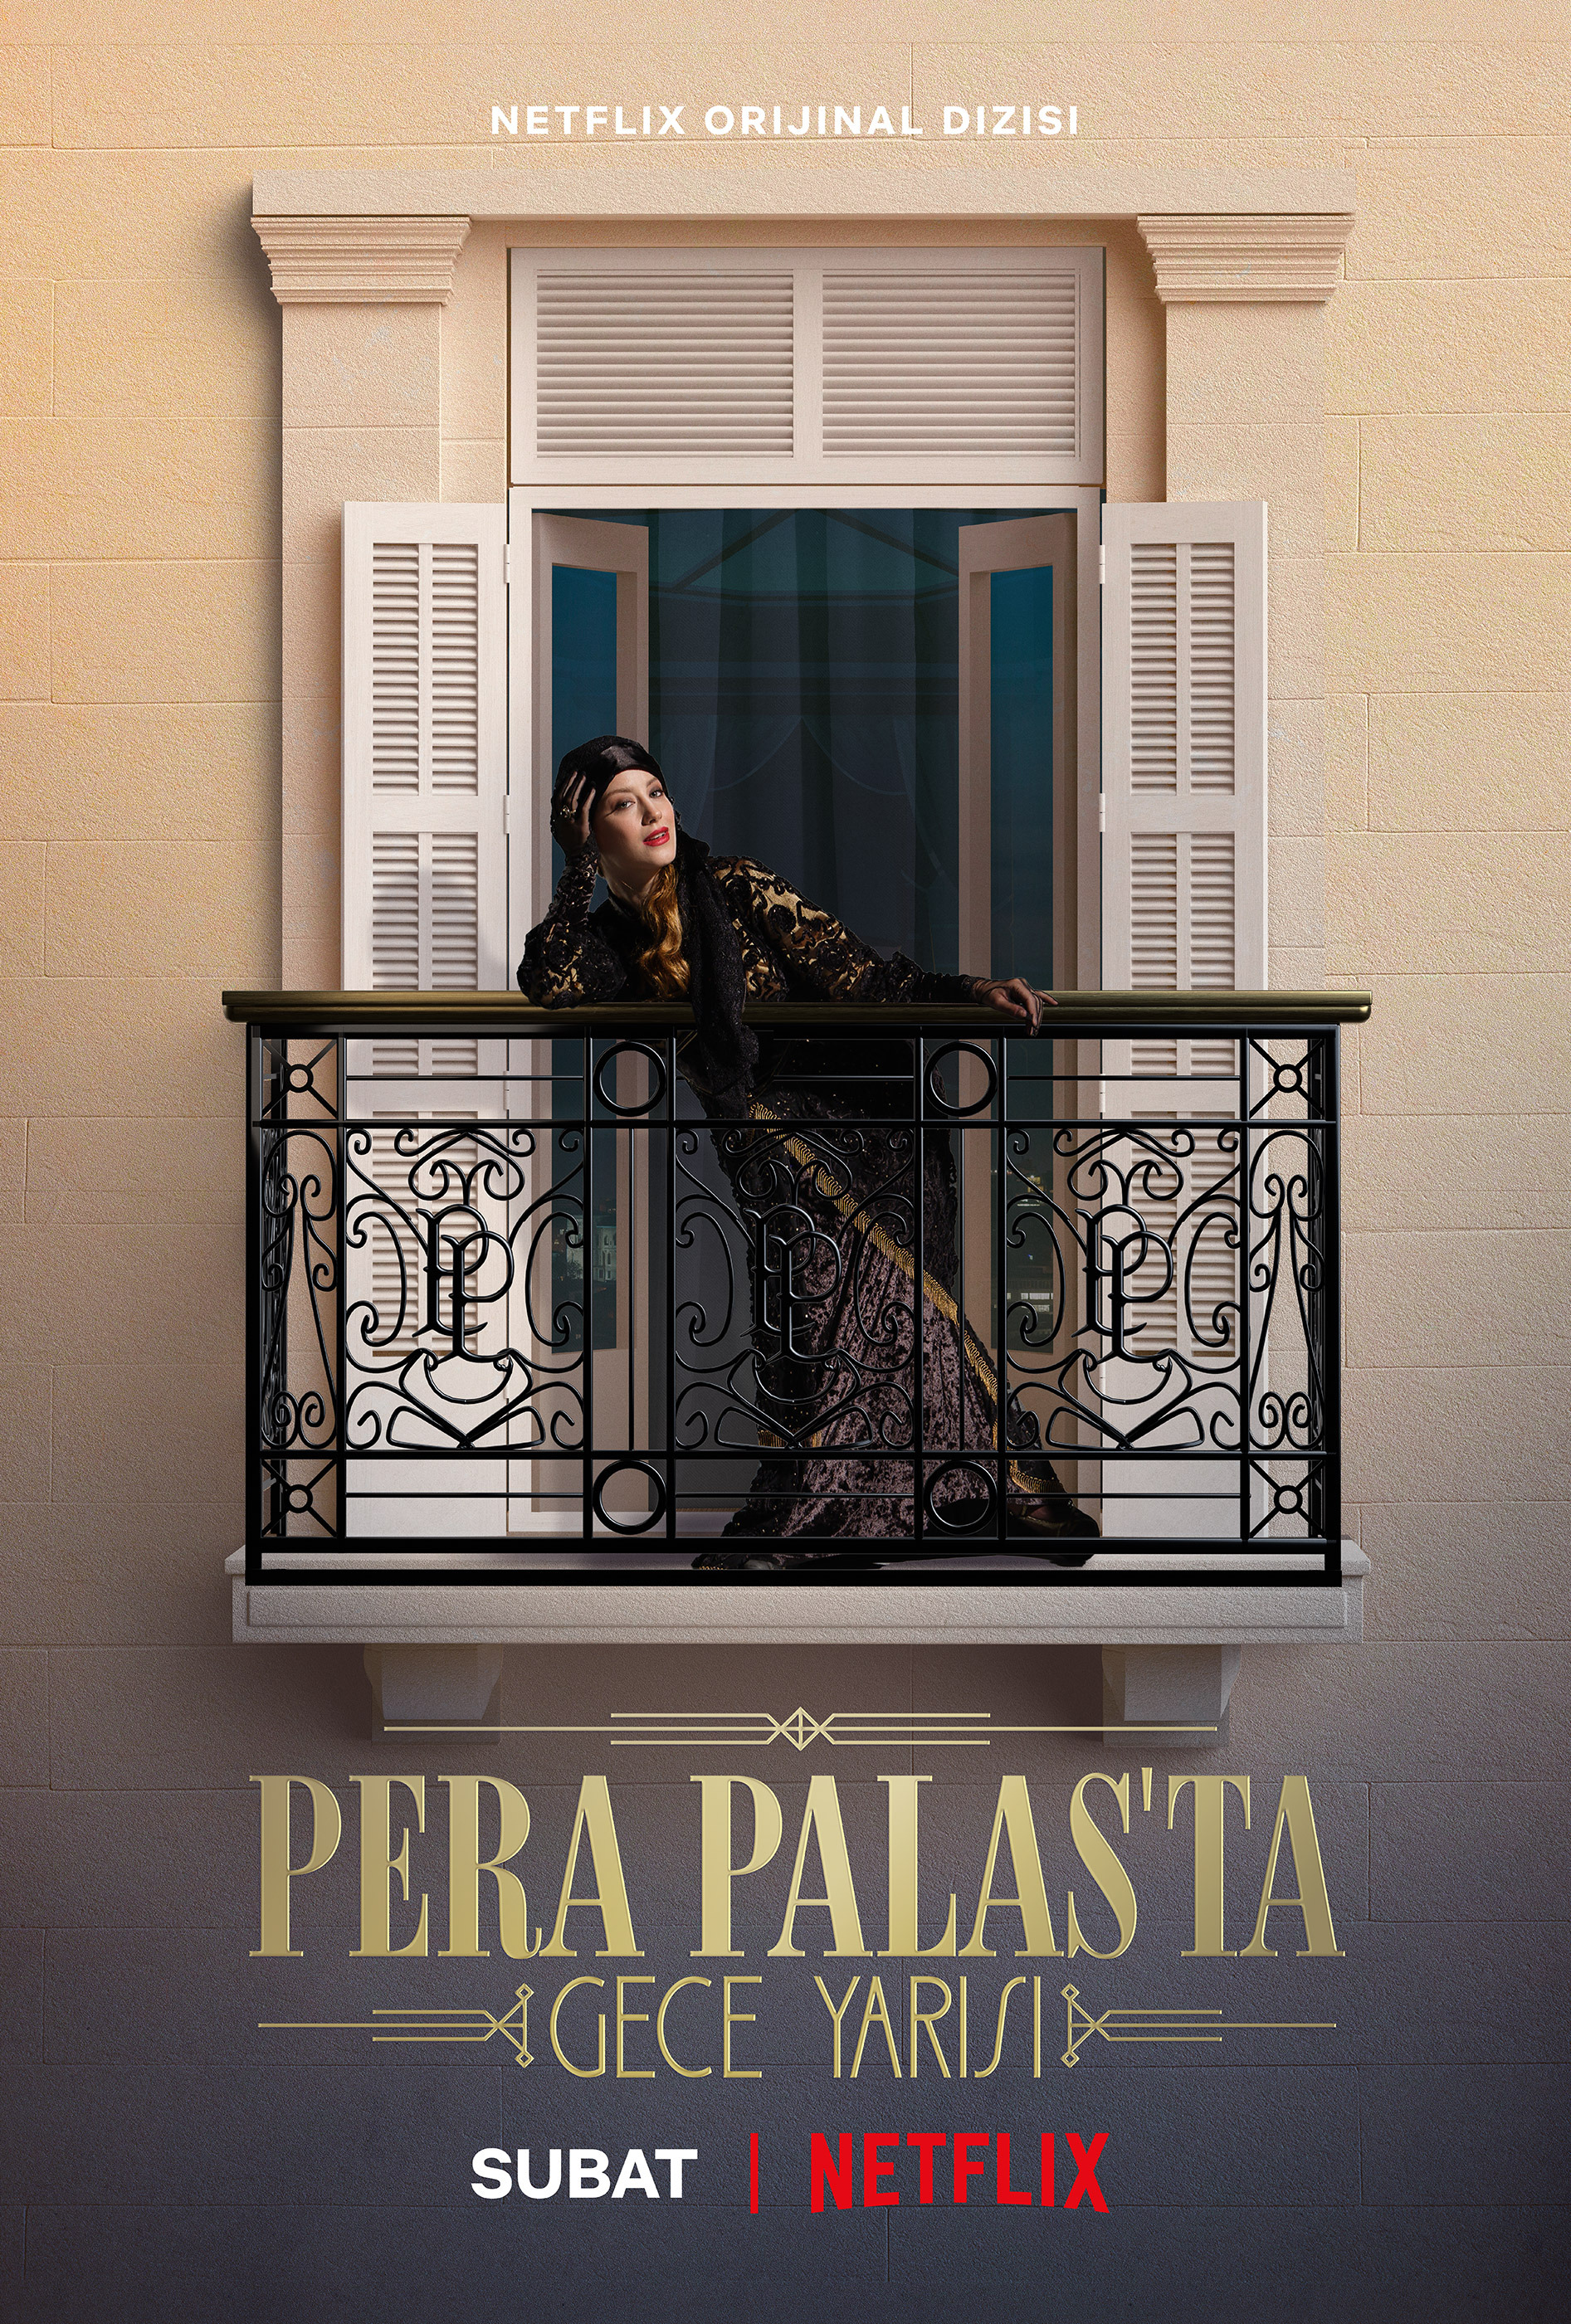 Mega Sized TV Poster Image for Pera Palas'ta Gece Yarisi (#5 of 10)